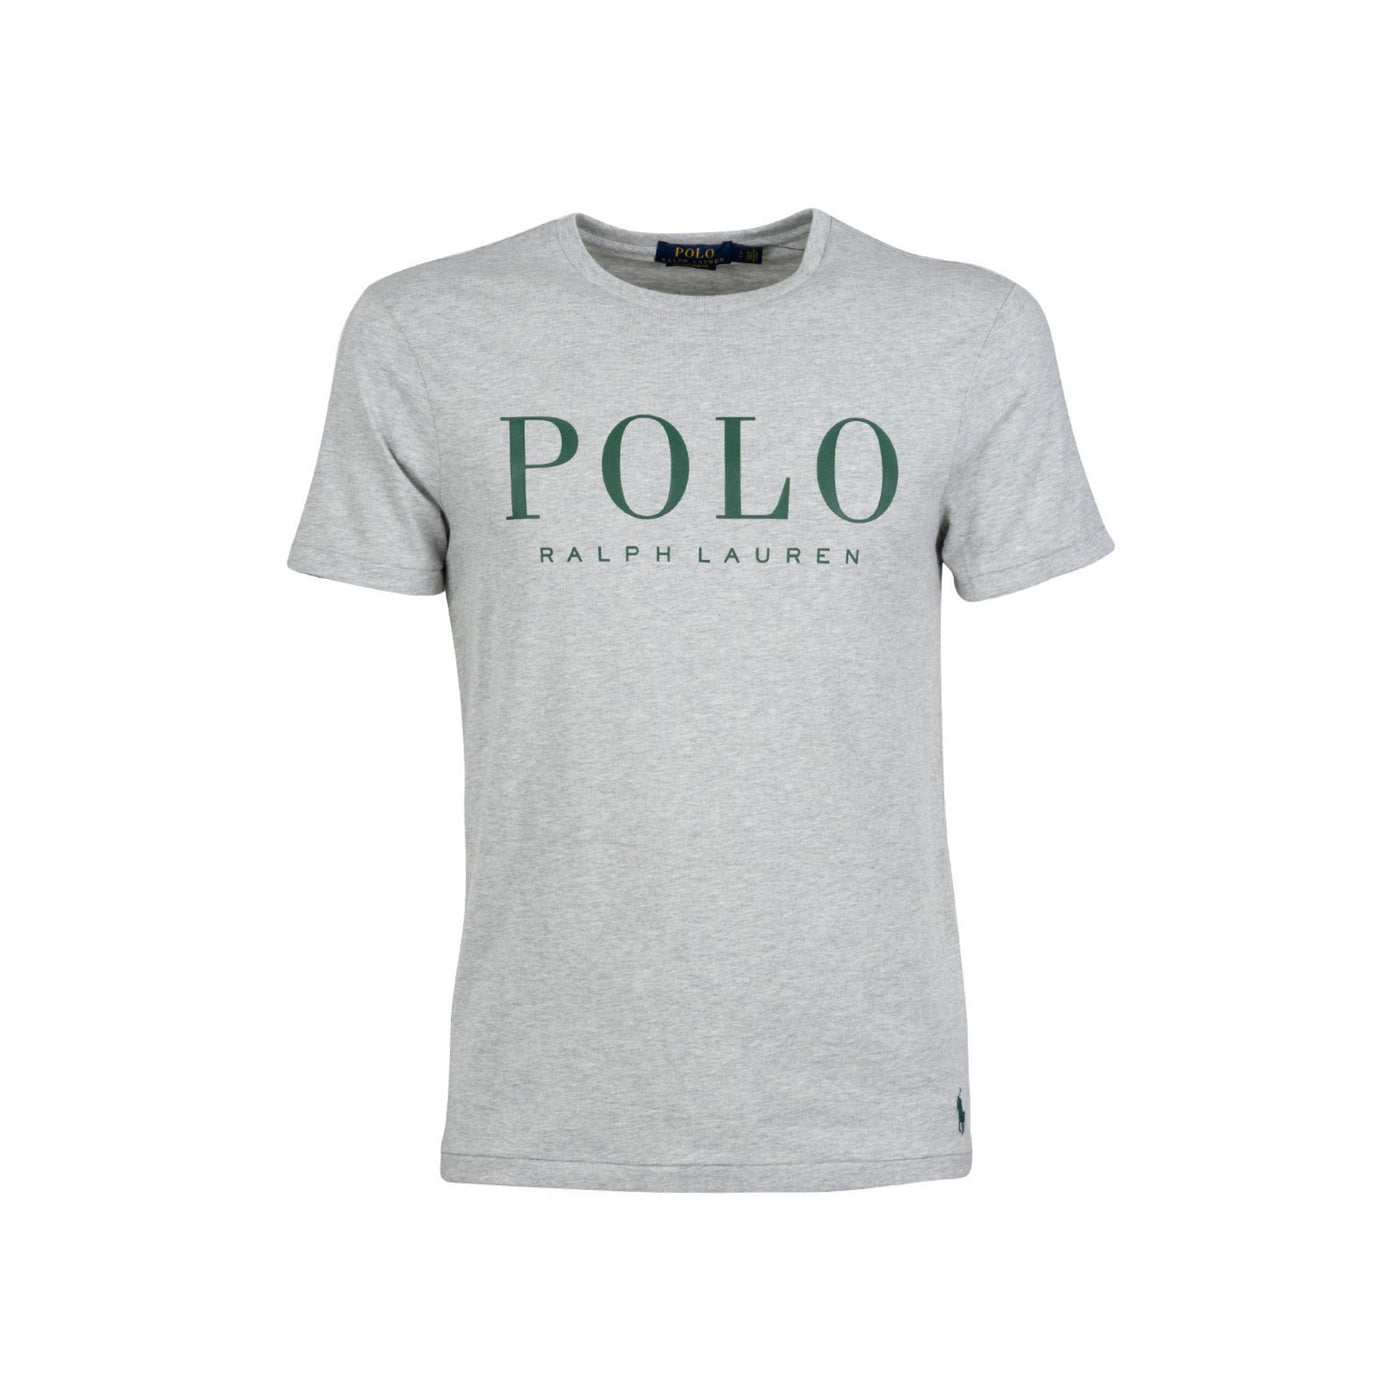 T-shirt uomo grigio Polo Ralph Lauren vista frontale